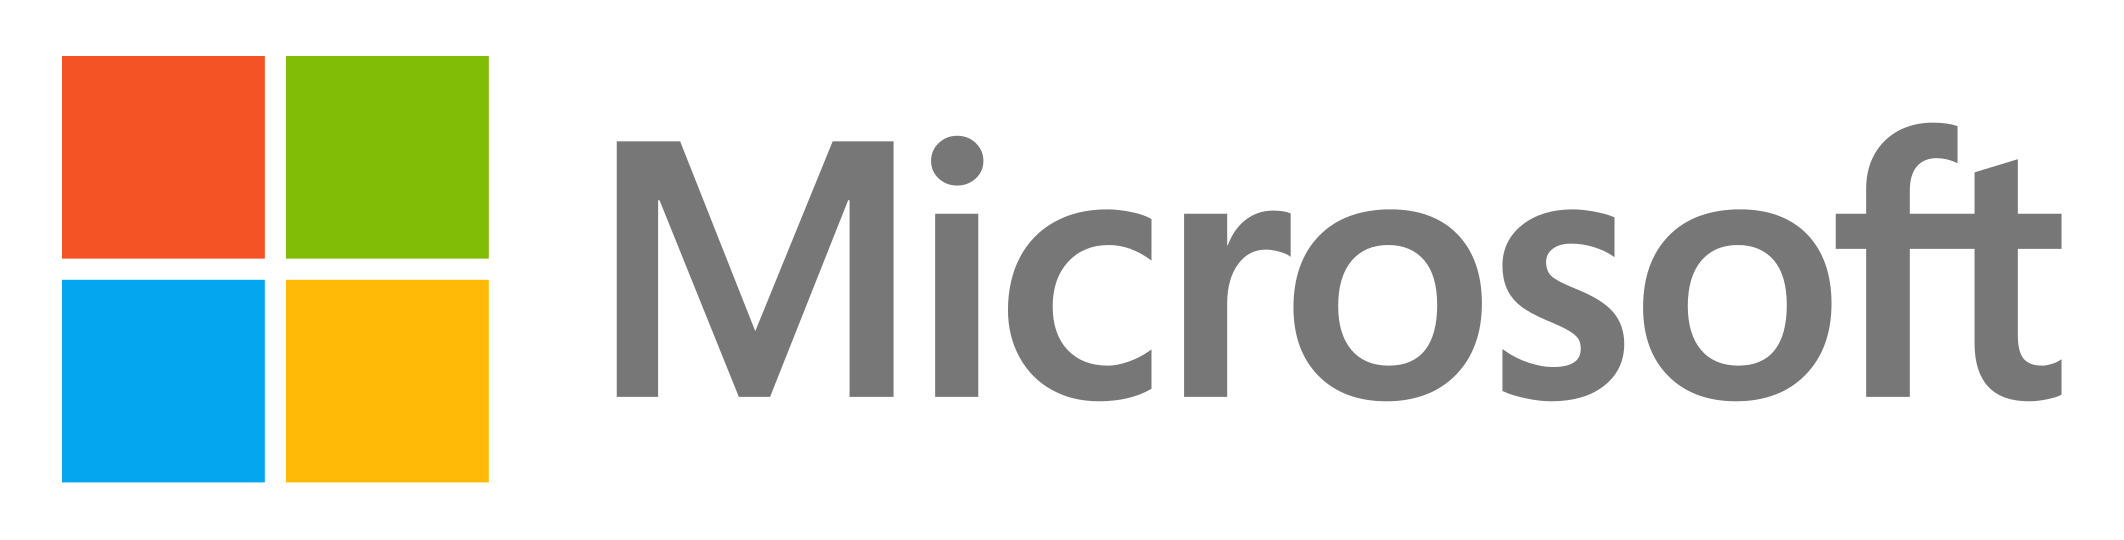 Microsoft-Logo-PNG-Transparent.png